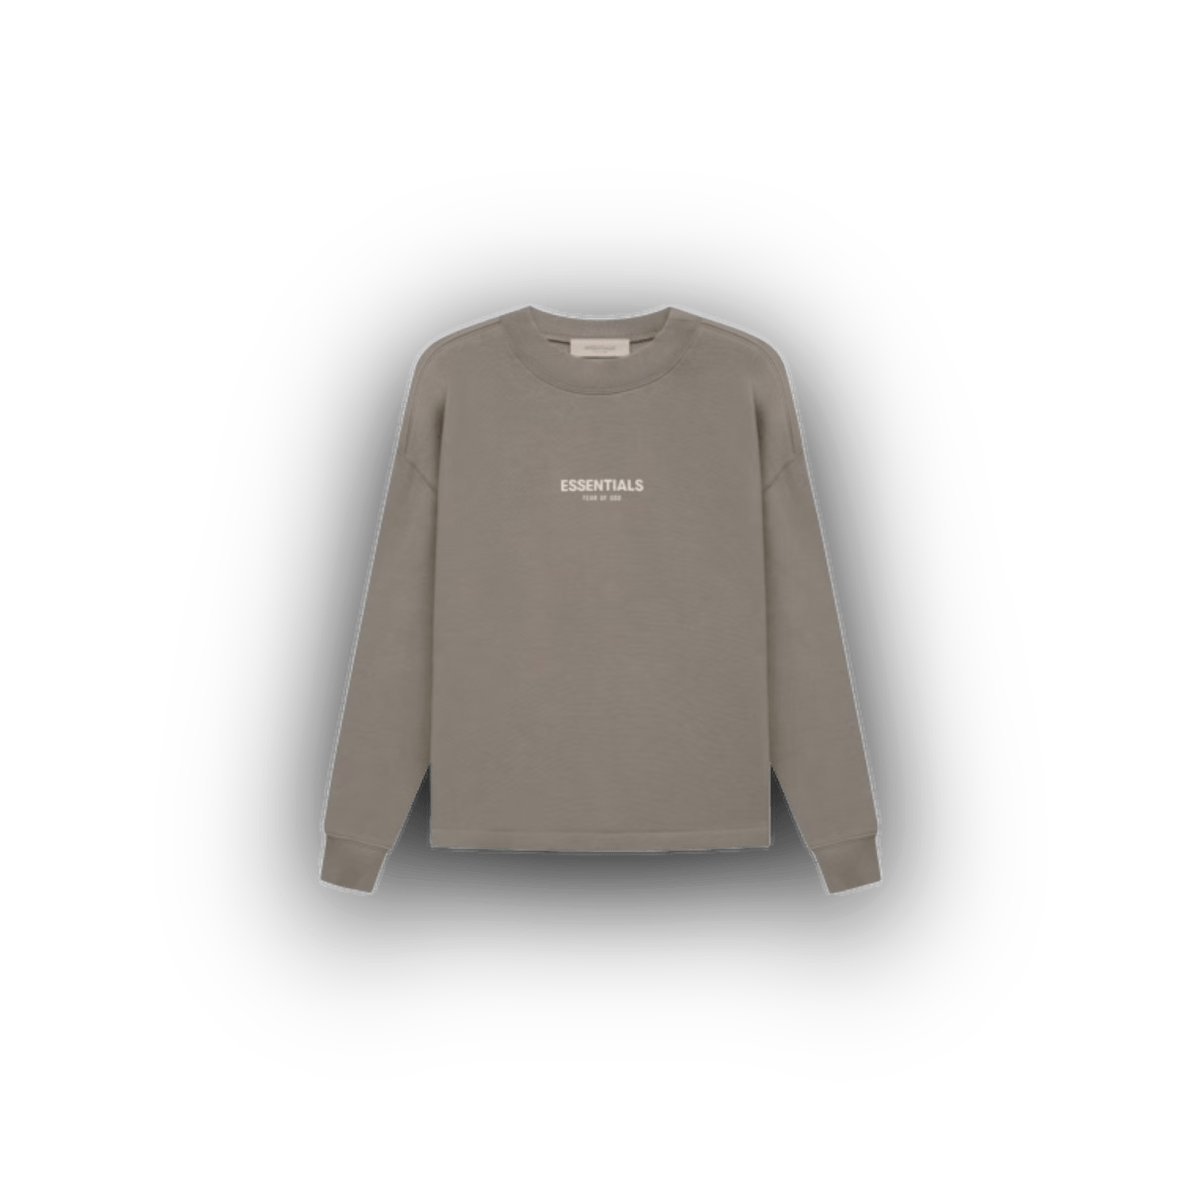 Essentials Fear of God Dark Tan Crewneck Sweatshirt - Sweatshirt - Jawns on Fire Sneakers & Streetwear